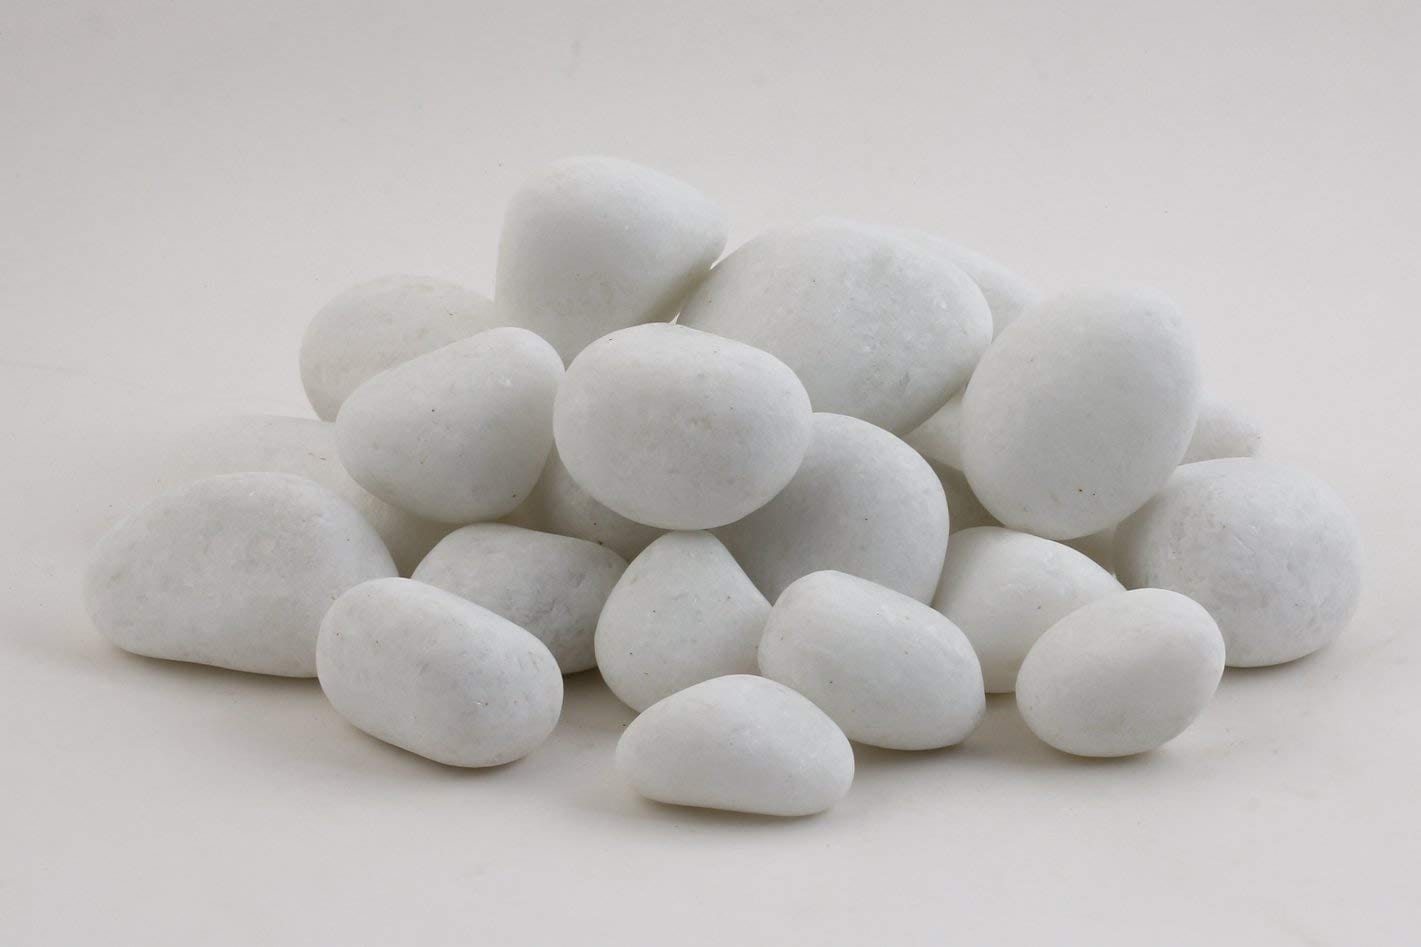 StonesForever Snow-White Stones (0.9 Kg, 1-2 Inches)